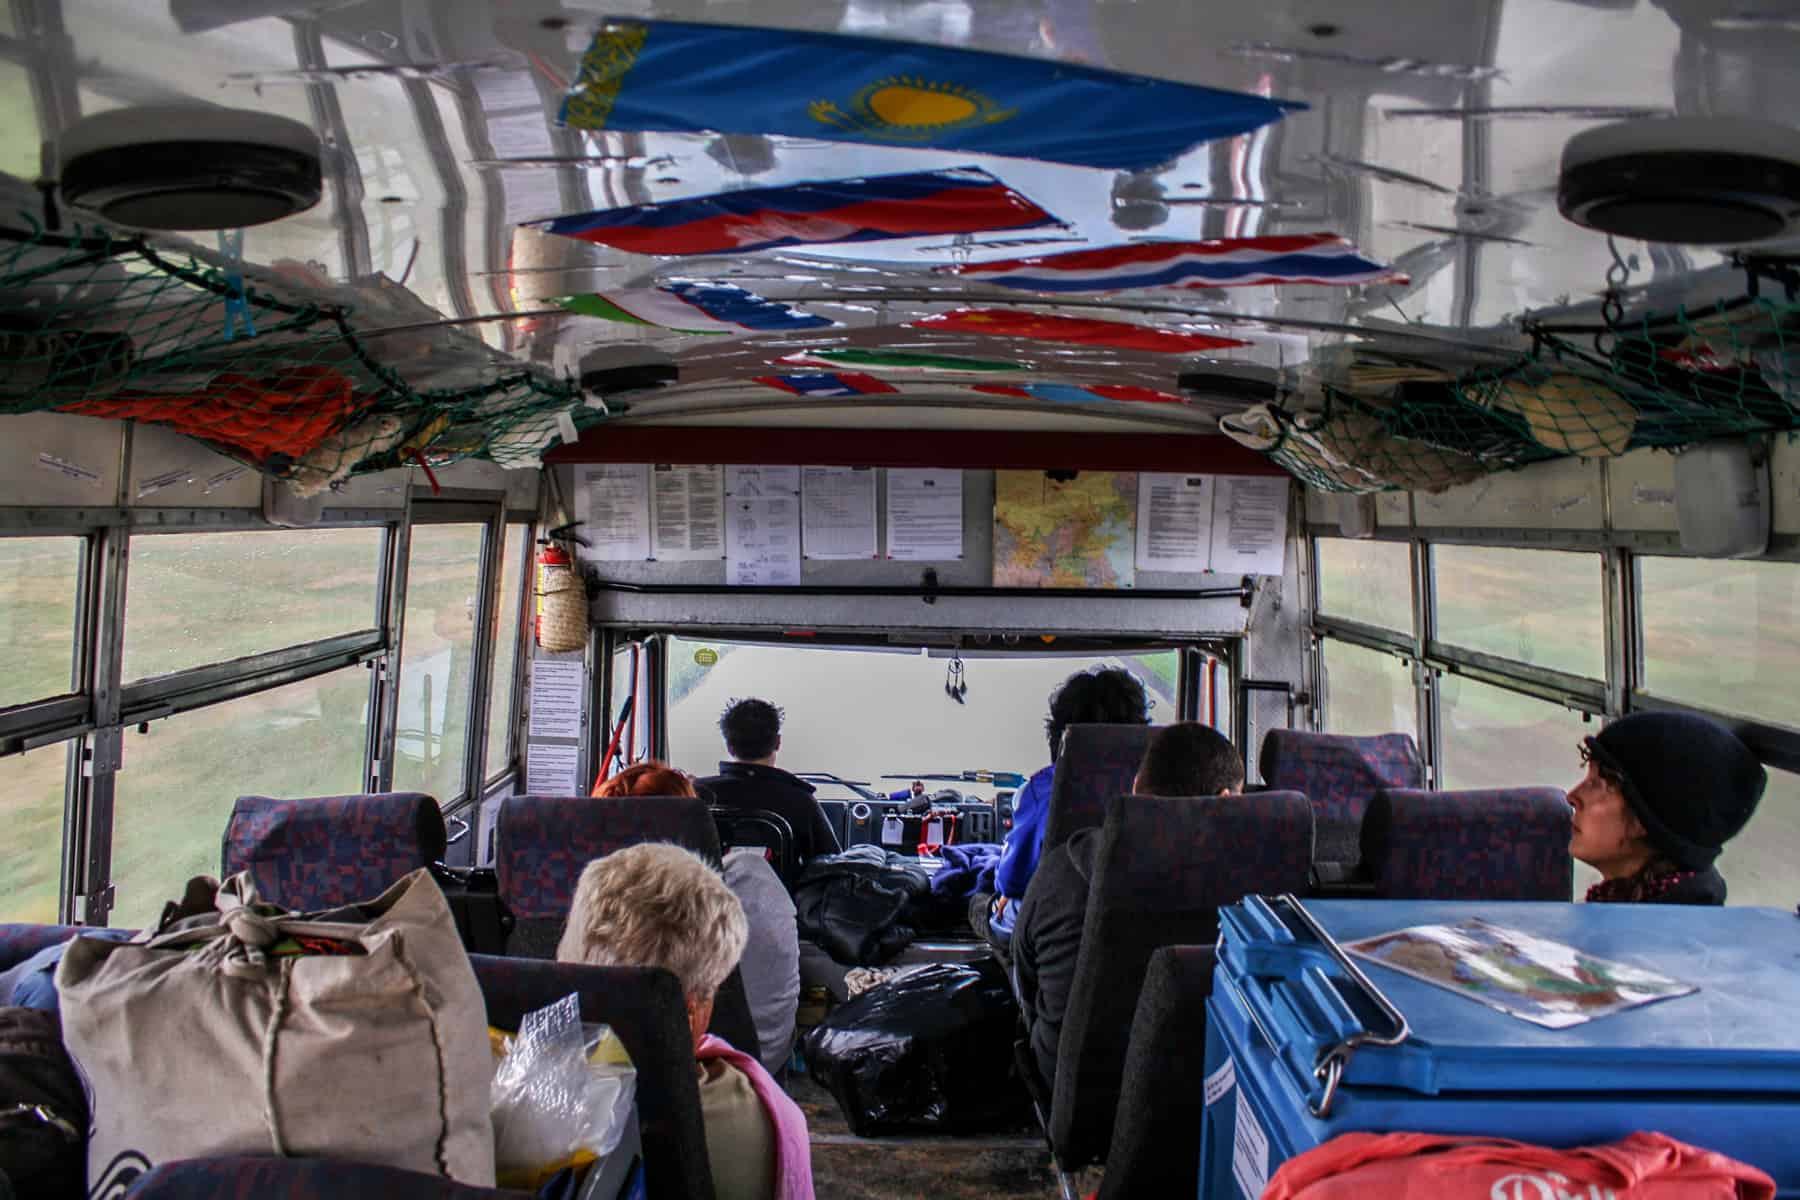 Inside the overlanding truck on the journey travelling Mongolia